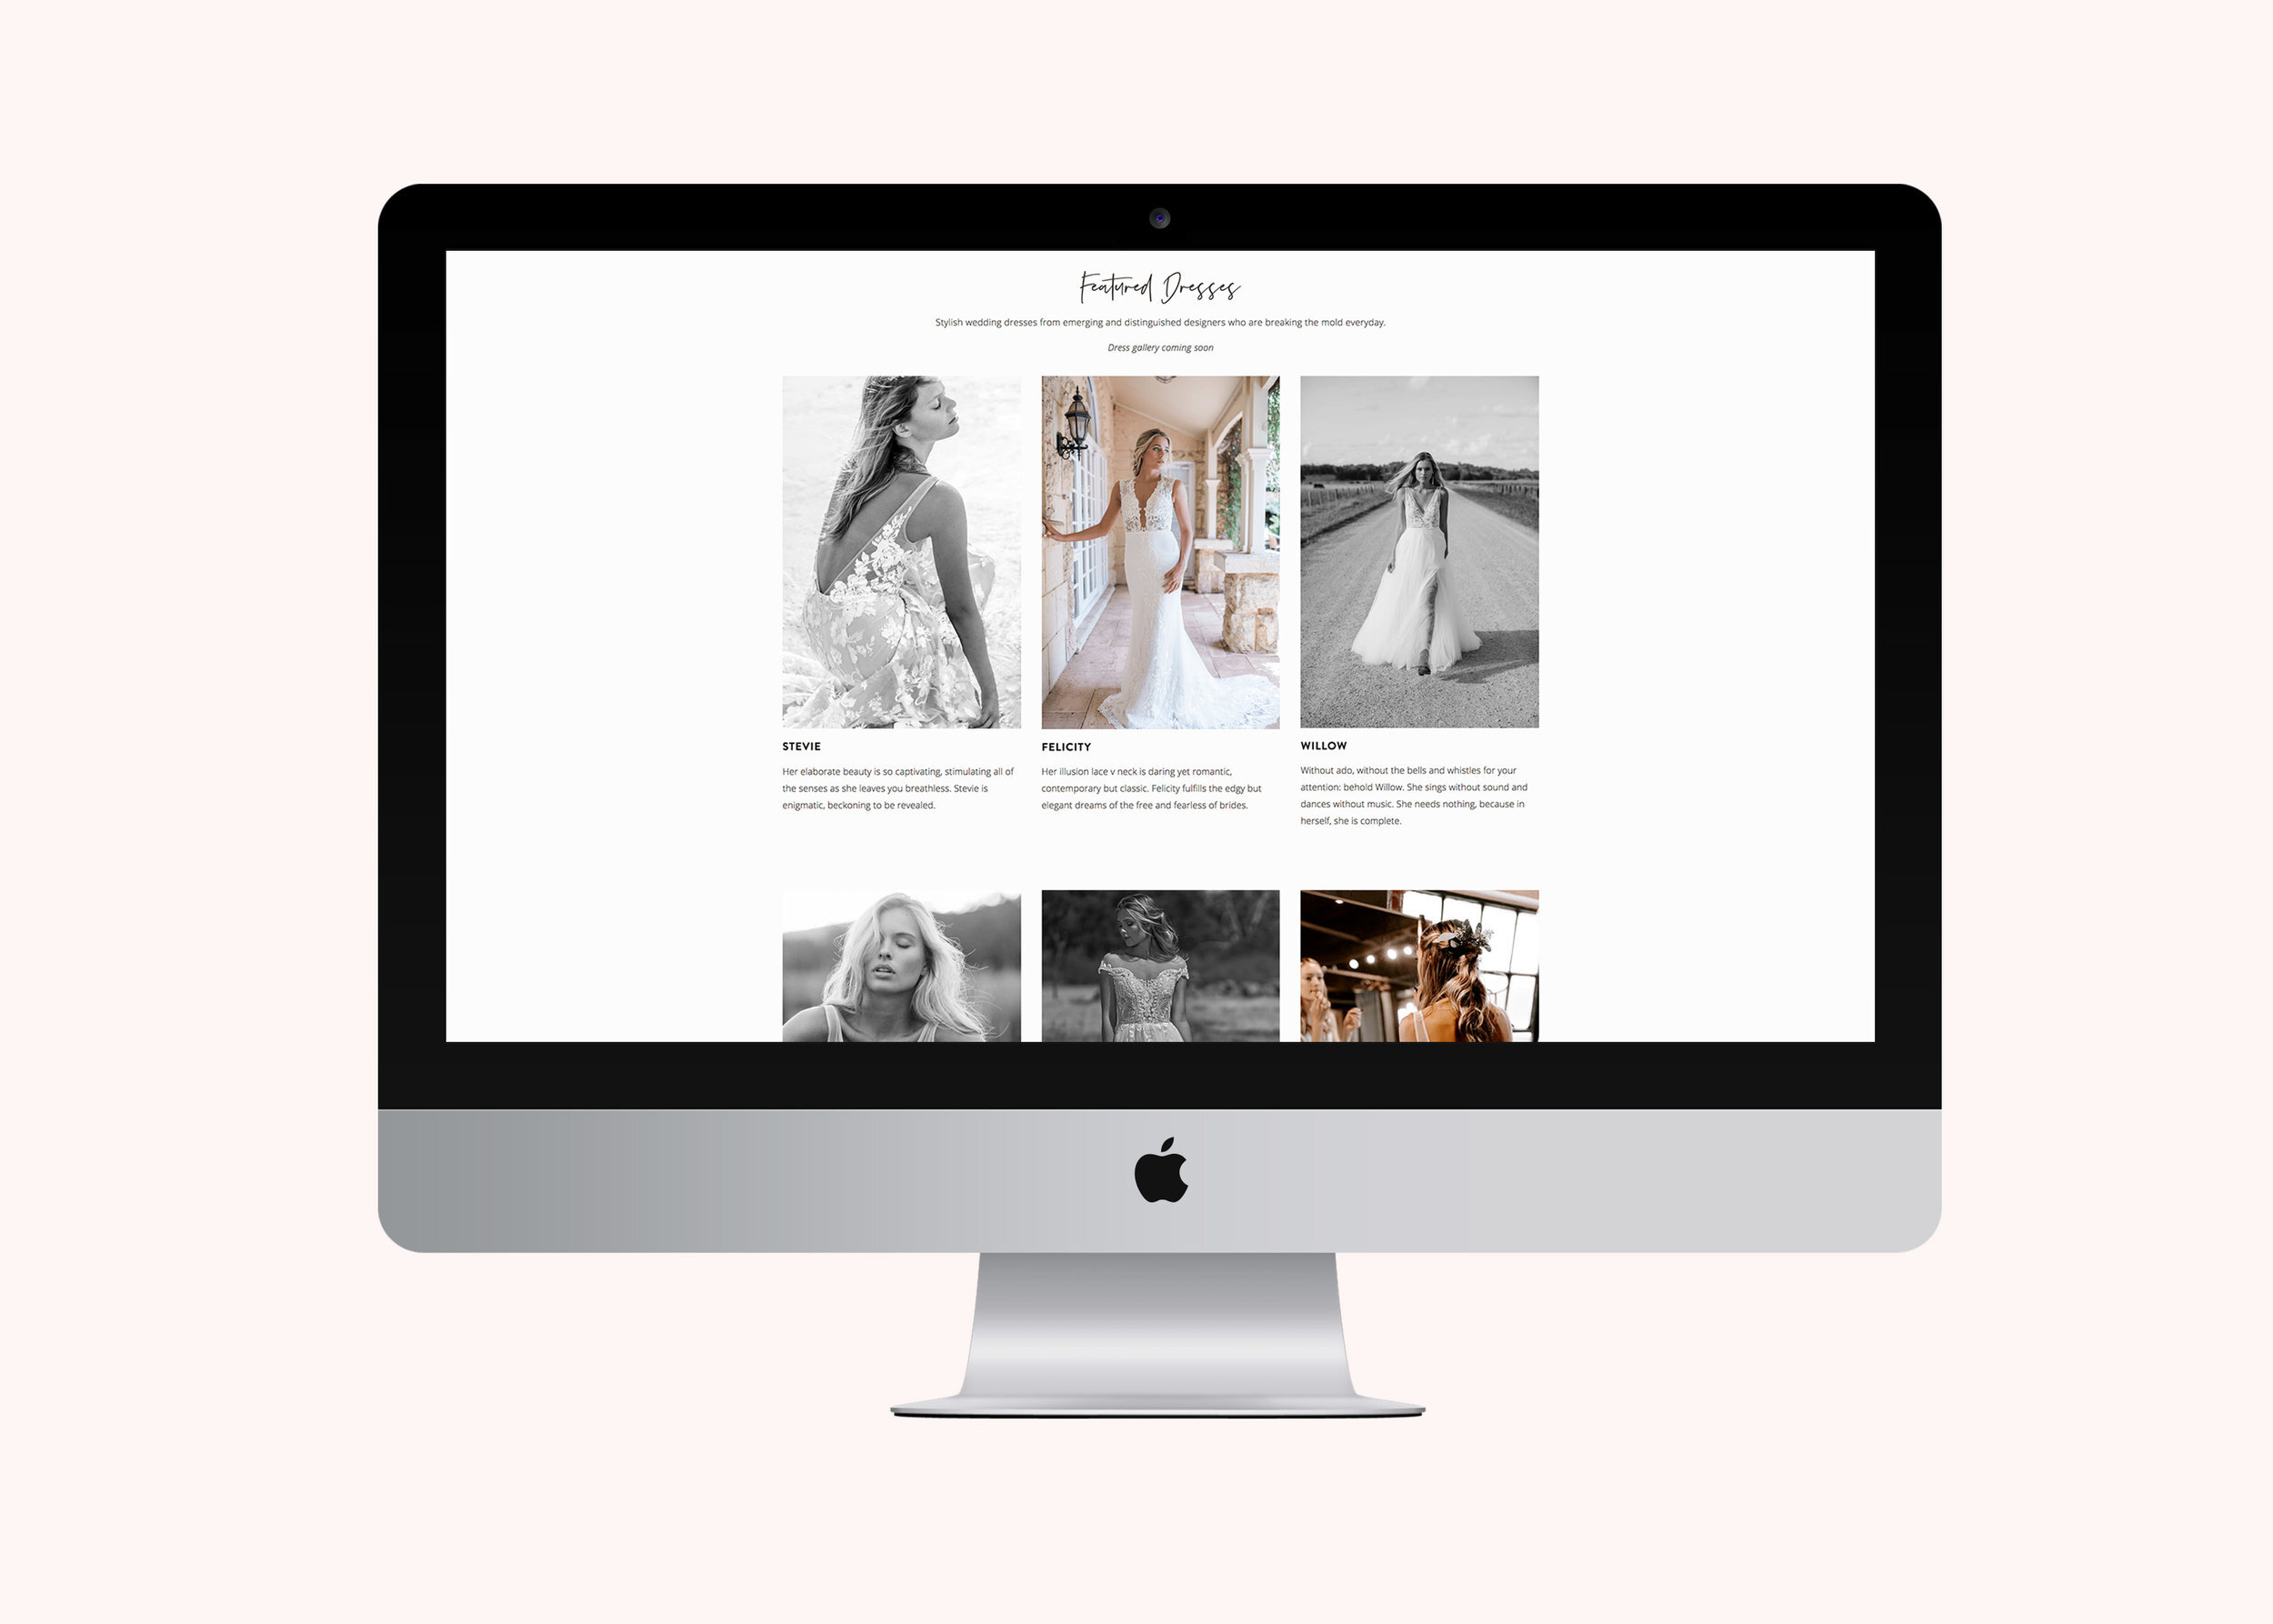 Bride-&-Winter-website-Featured_Dresses.jpg